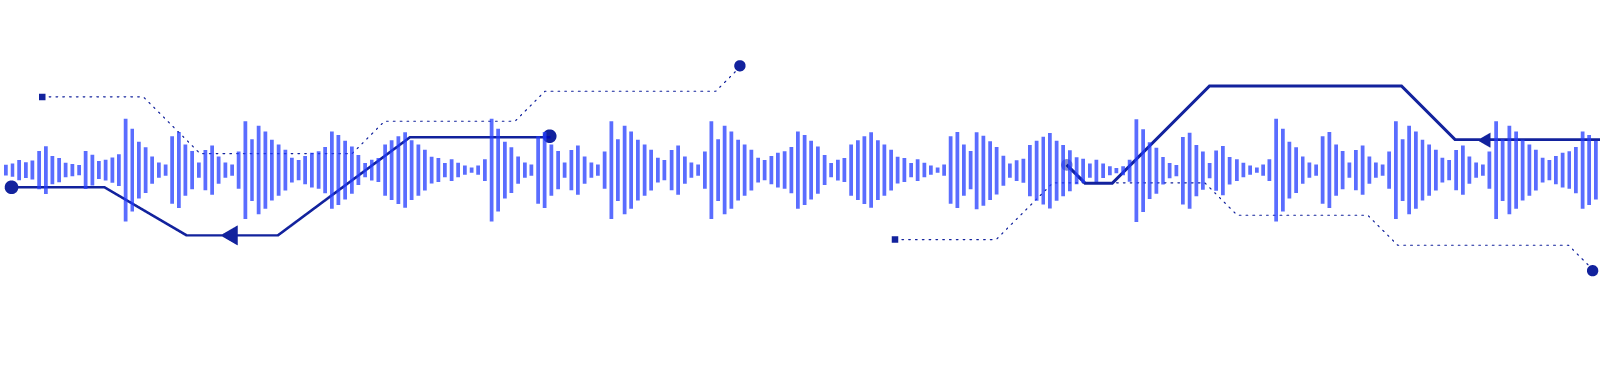 Soundwaves Graphic 2